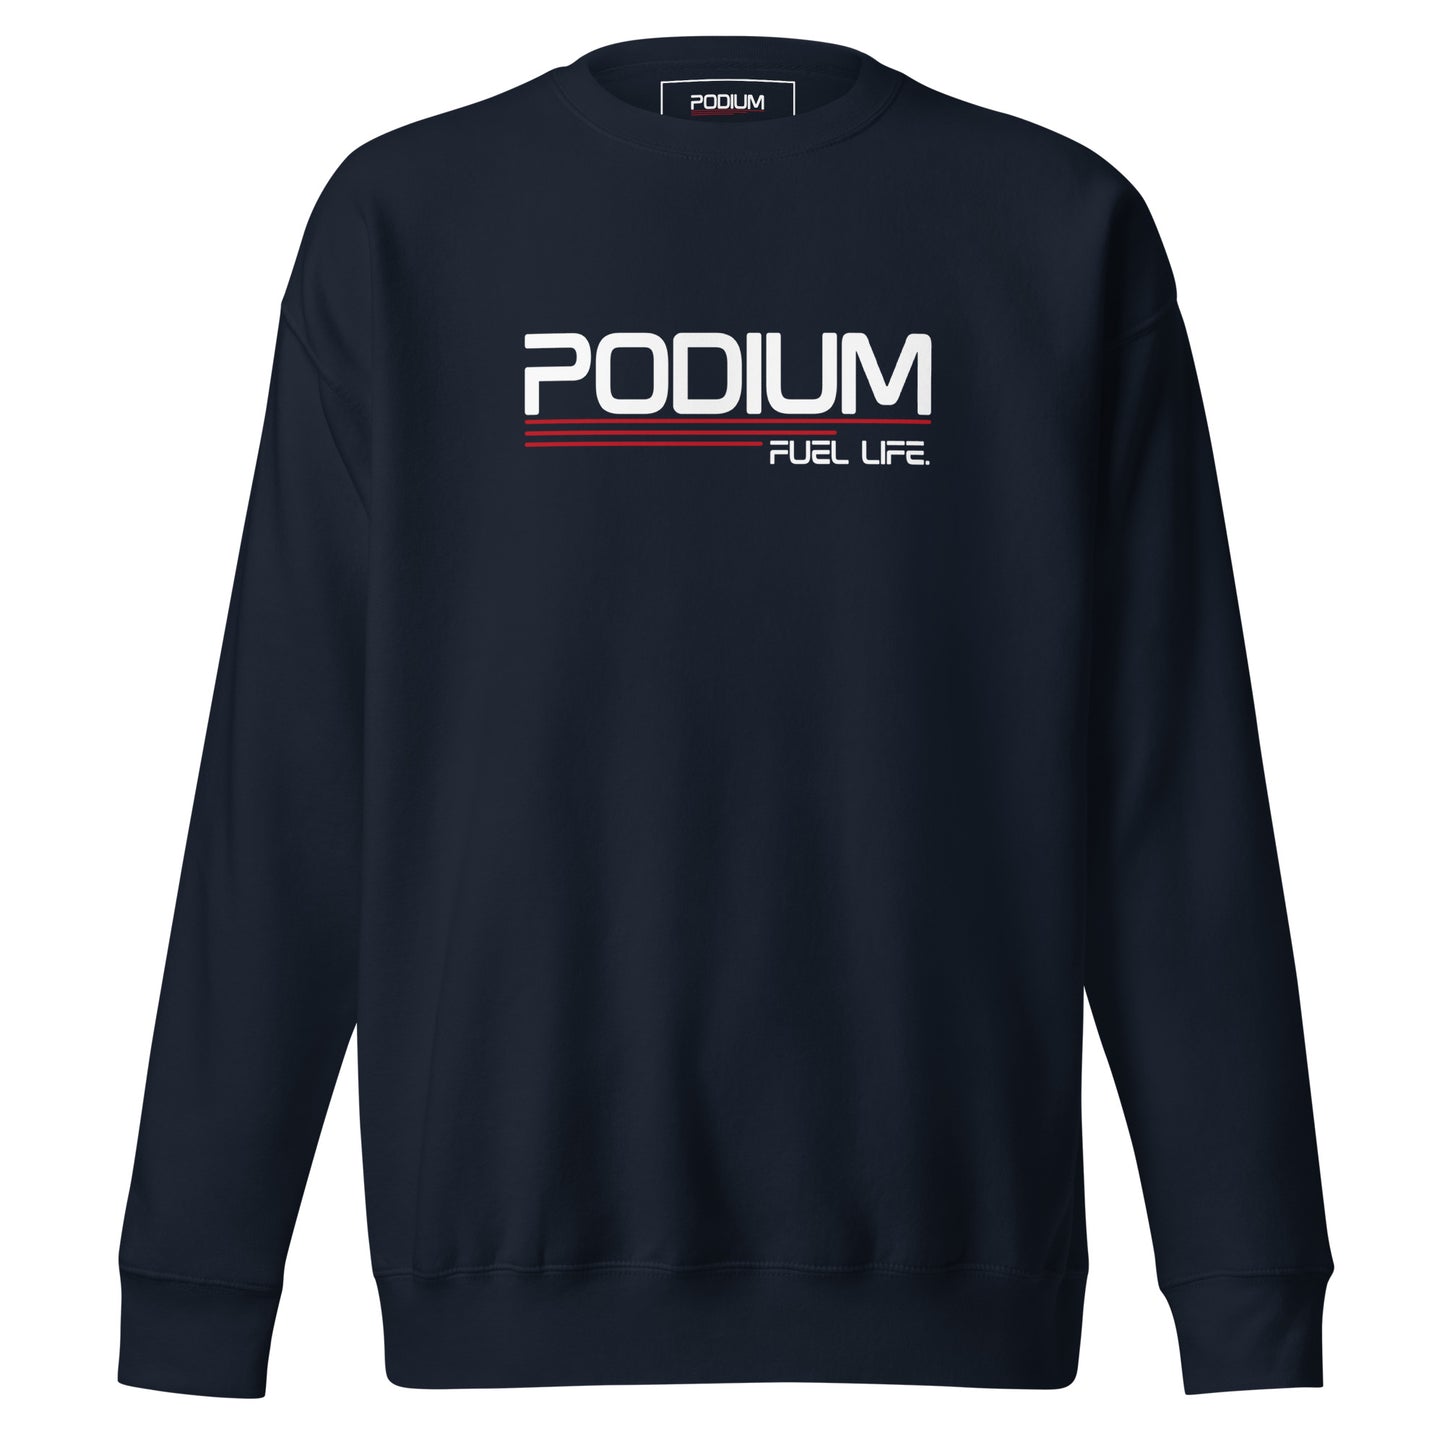 Podium Fuel Life Sweatshirt